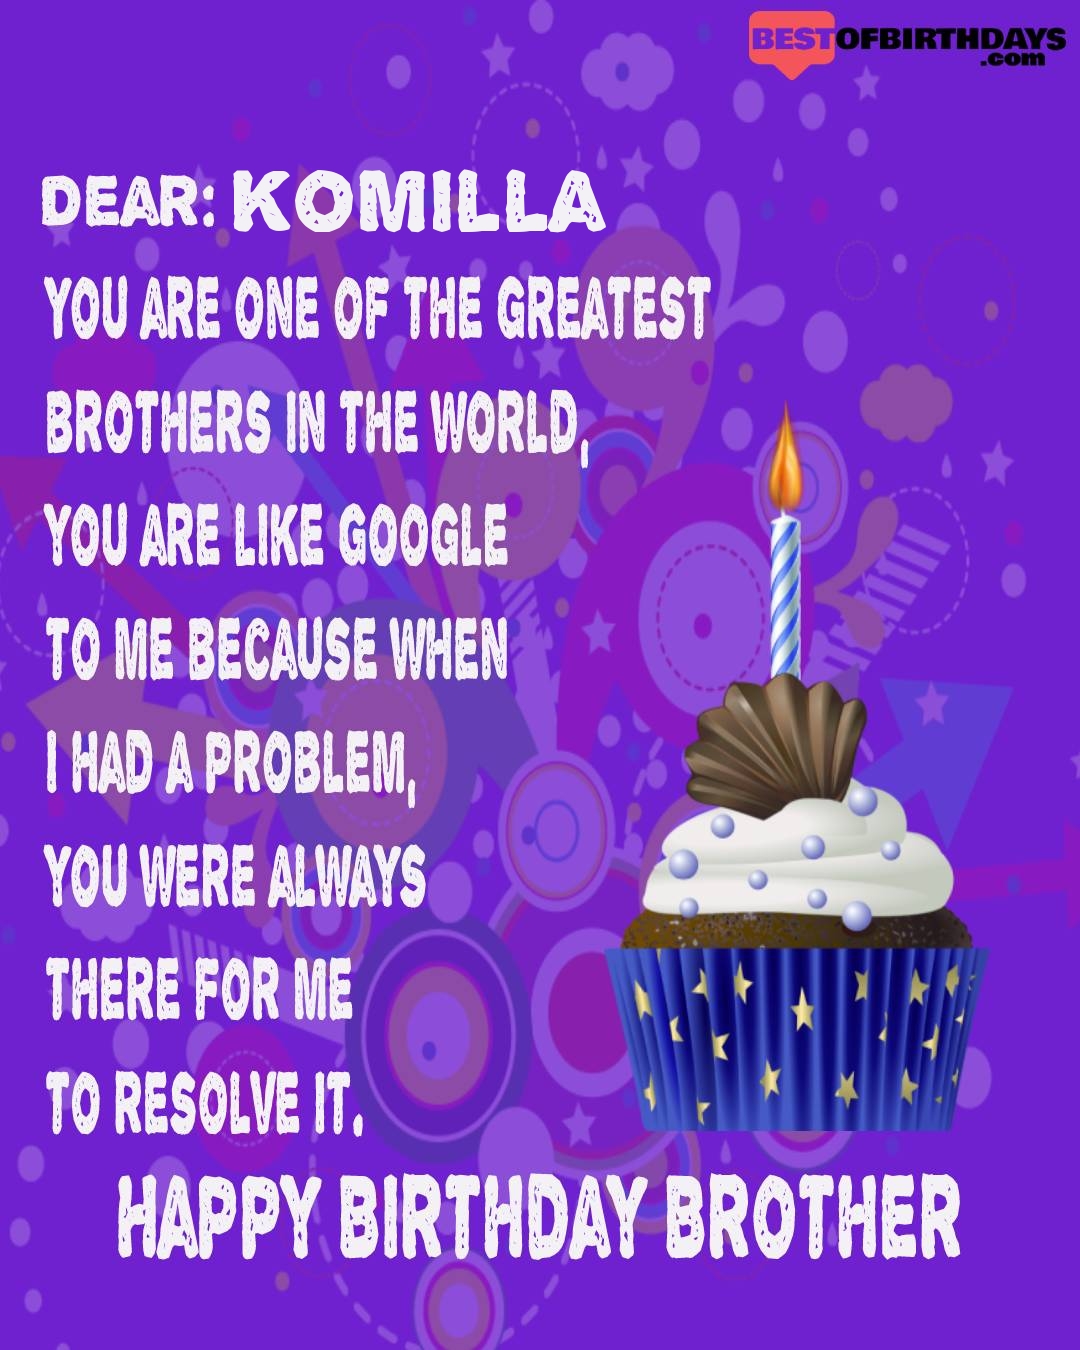 Happy birthday komilla bhai brother bro